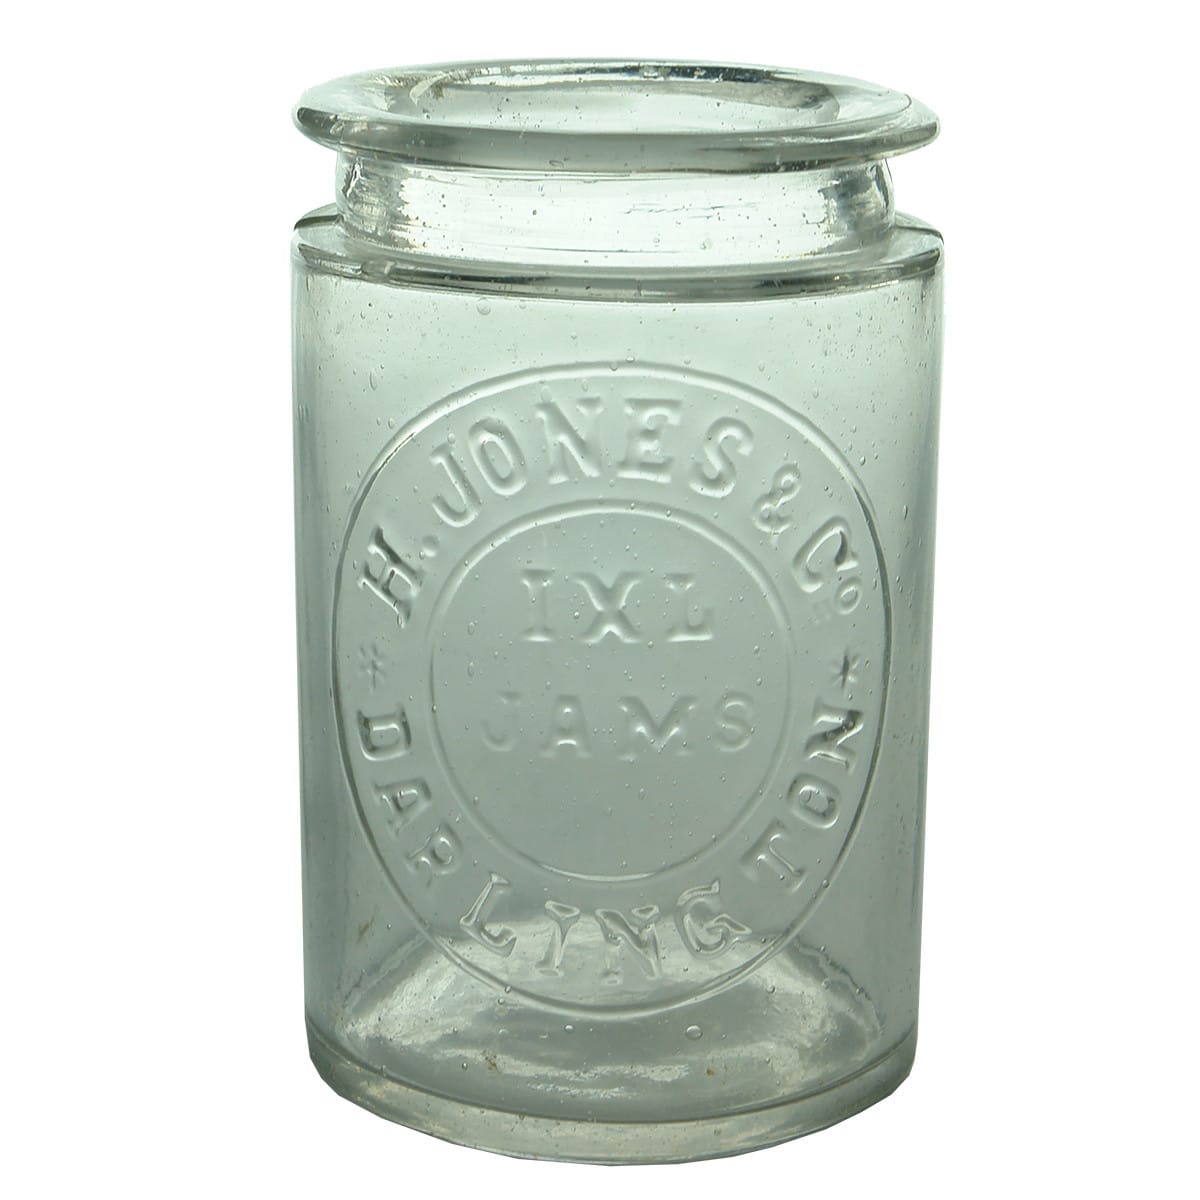 Jar. H. Jones & Co., IXL Jams, Darlington. Clear. 1 Pound. (New South Wales)